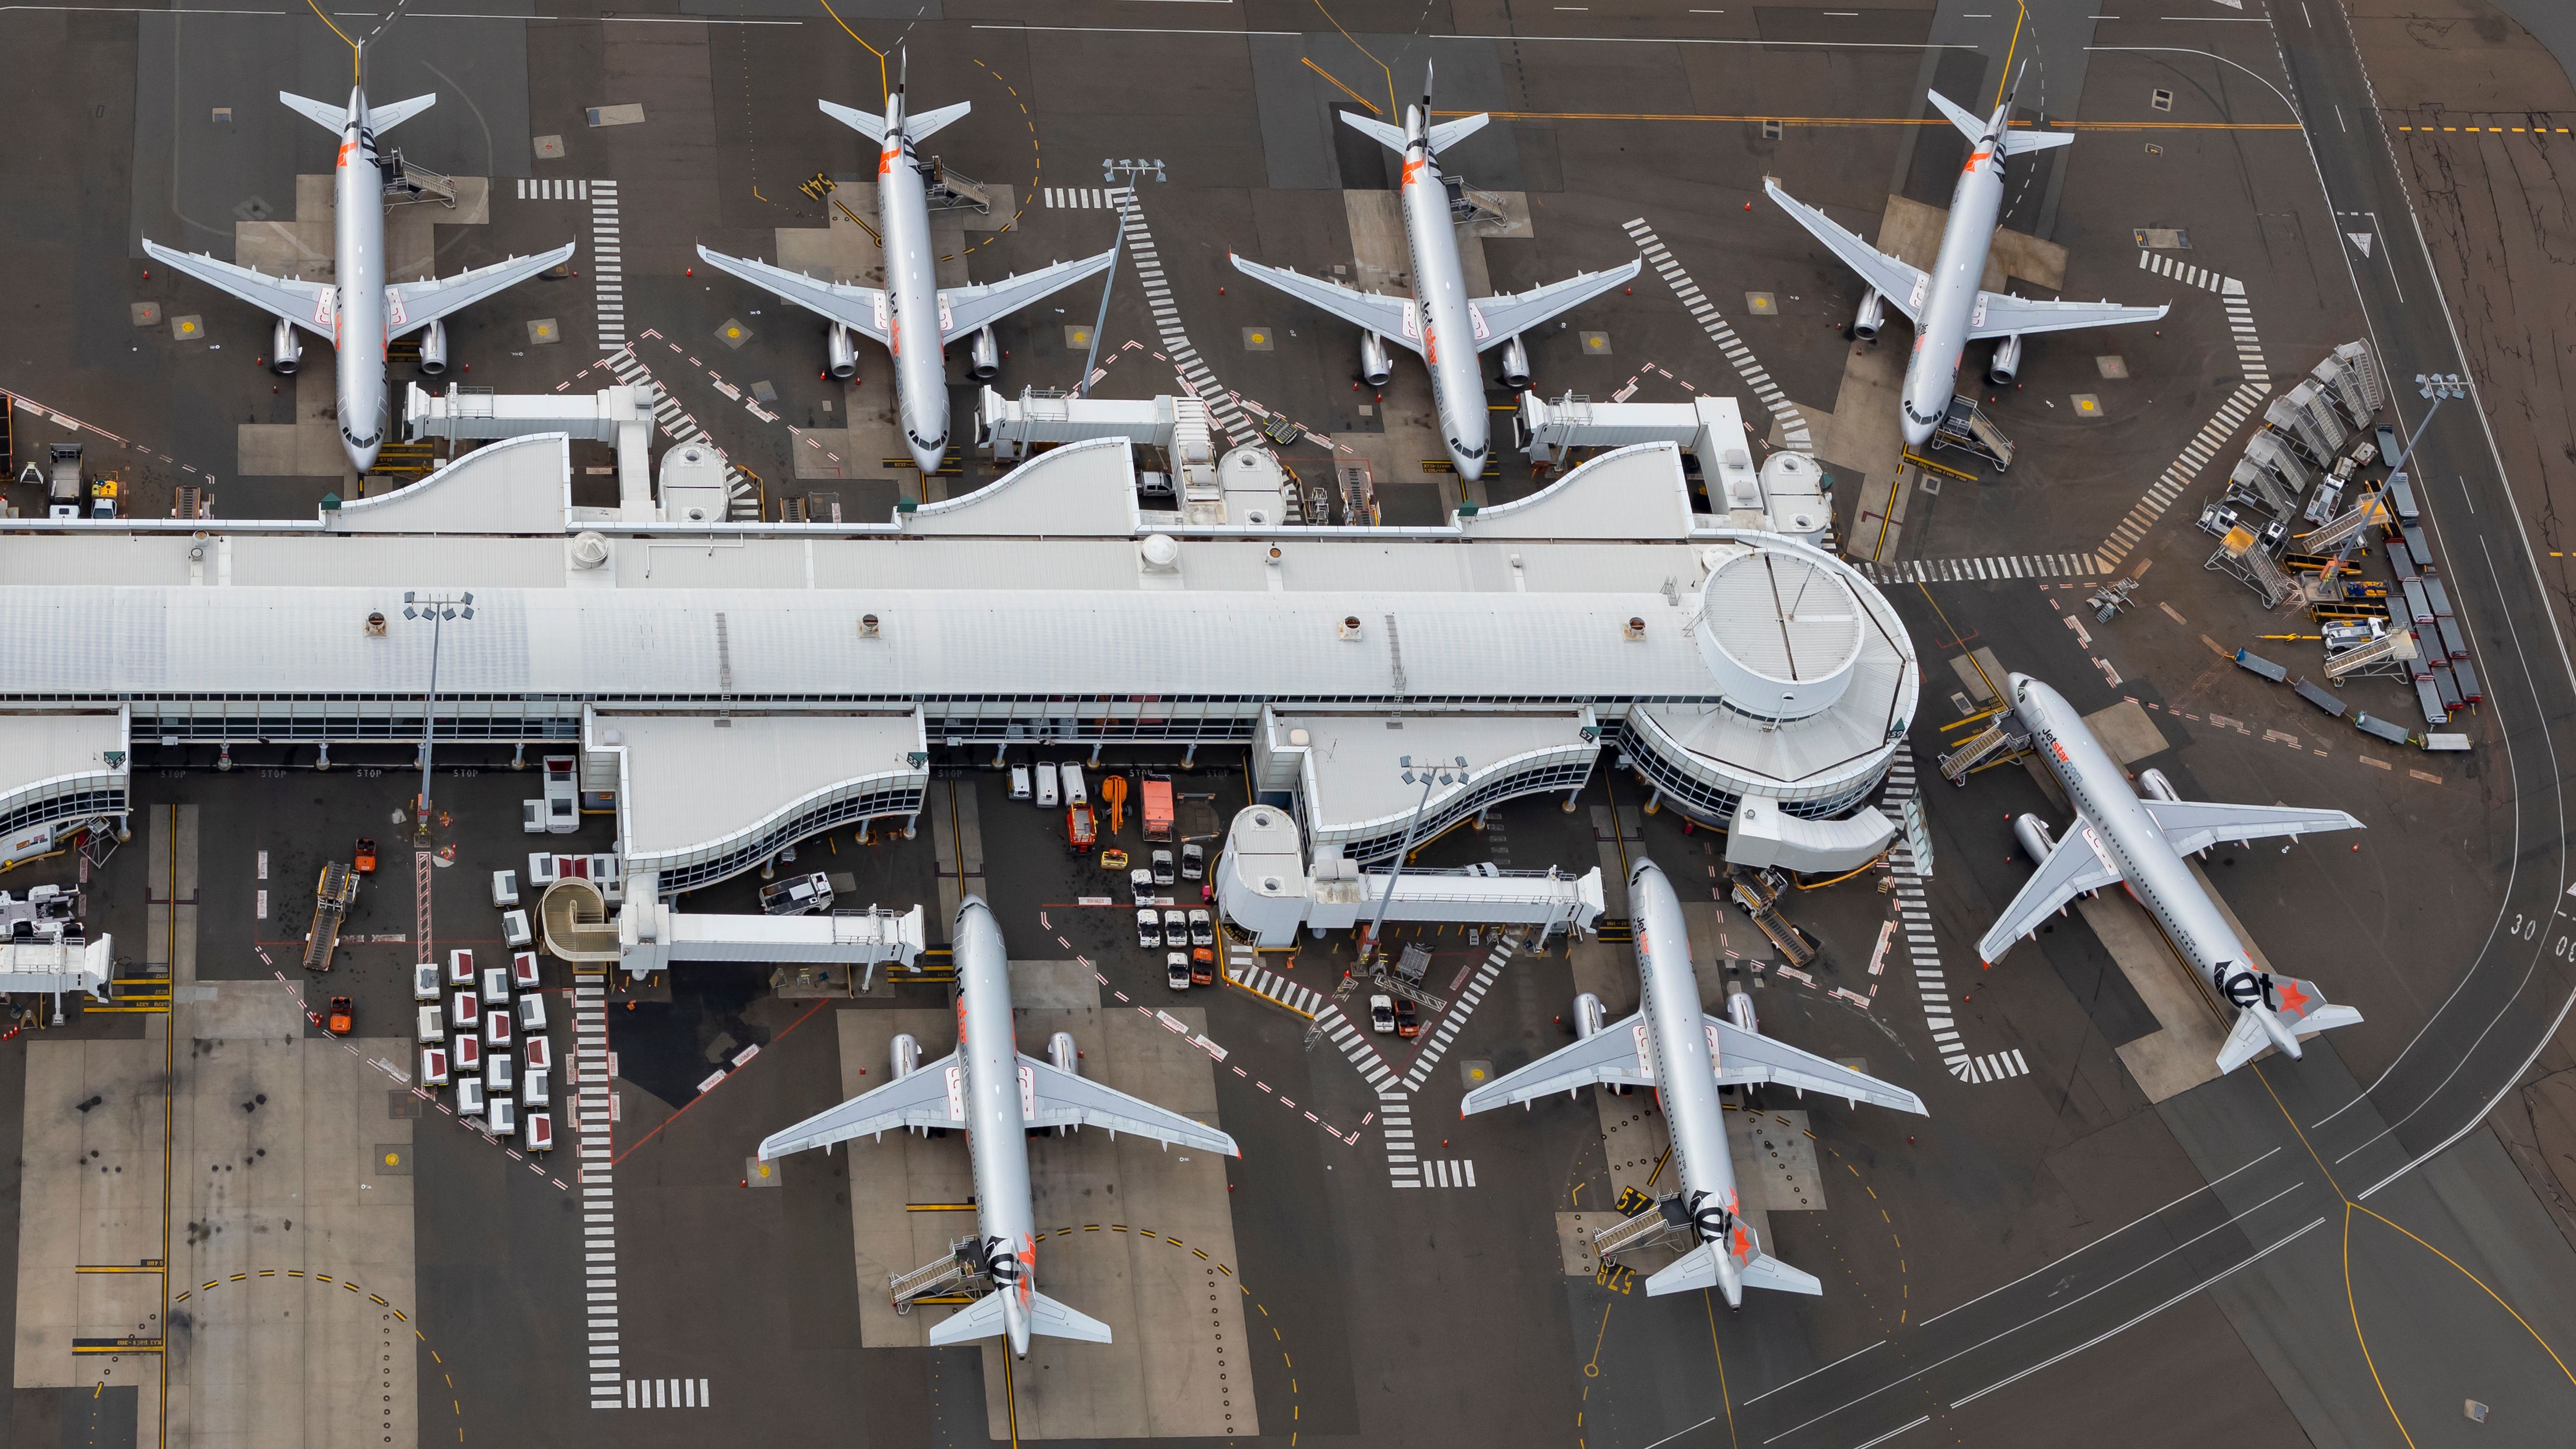 Jetstar operate at Sydney Airport